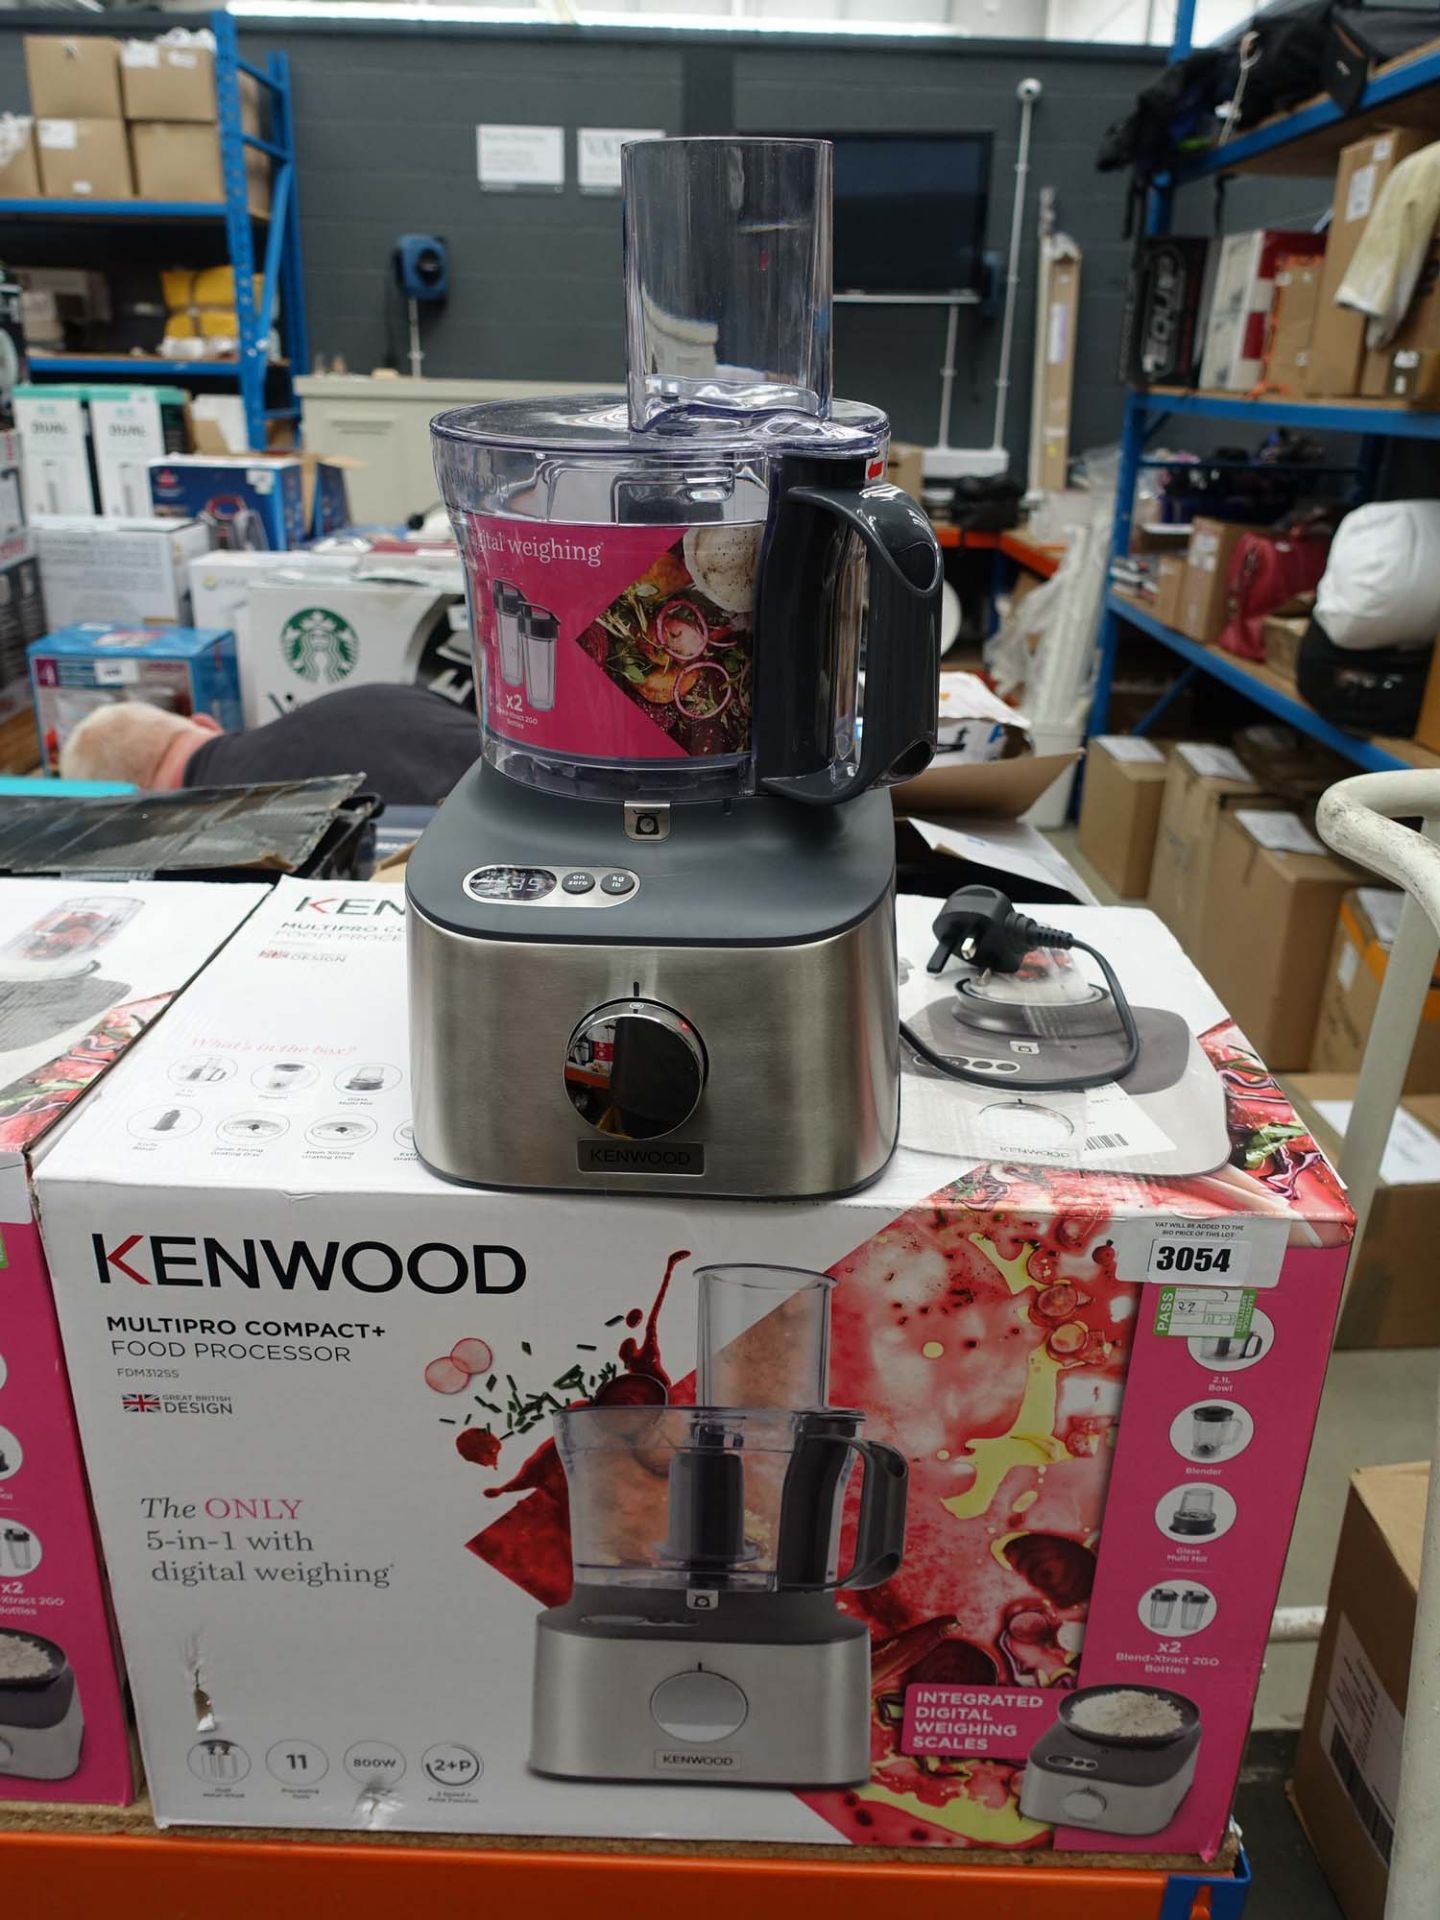 (7) Kenwood Multi Pro compact food processor